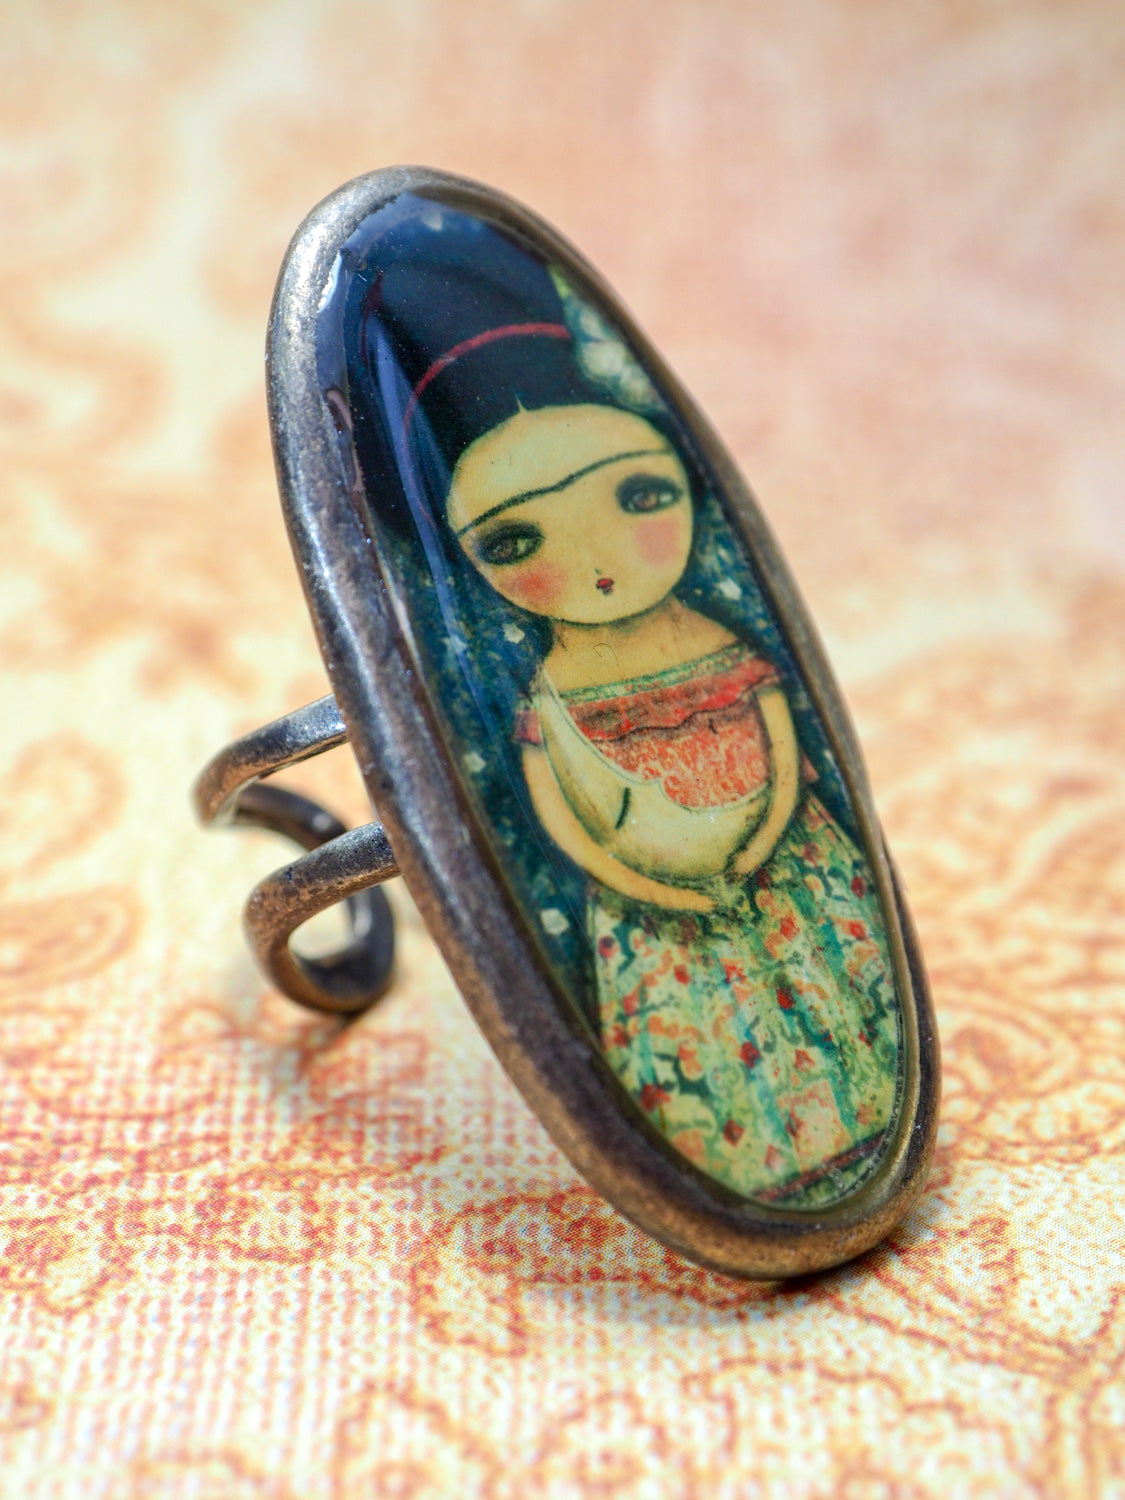 LULLABY FOR THE MOON - Frida cradles the moon on this Danita original ring, Jewelry by Danita Art